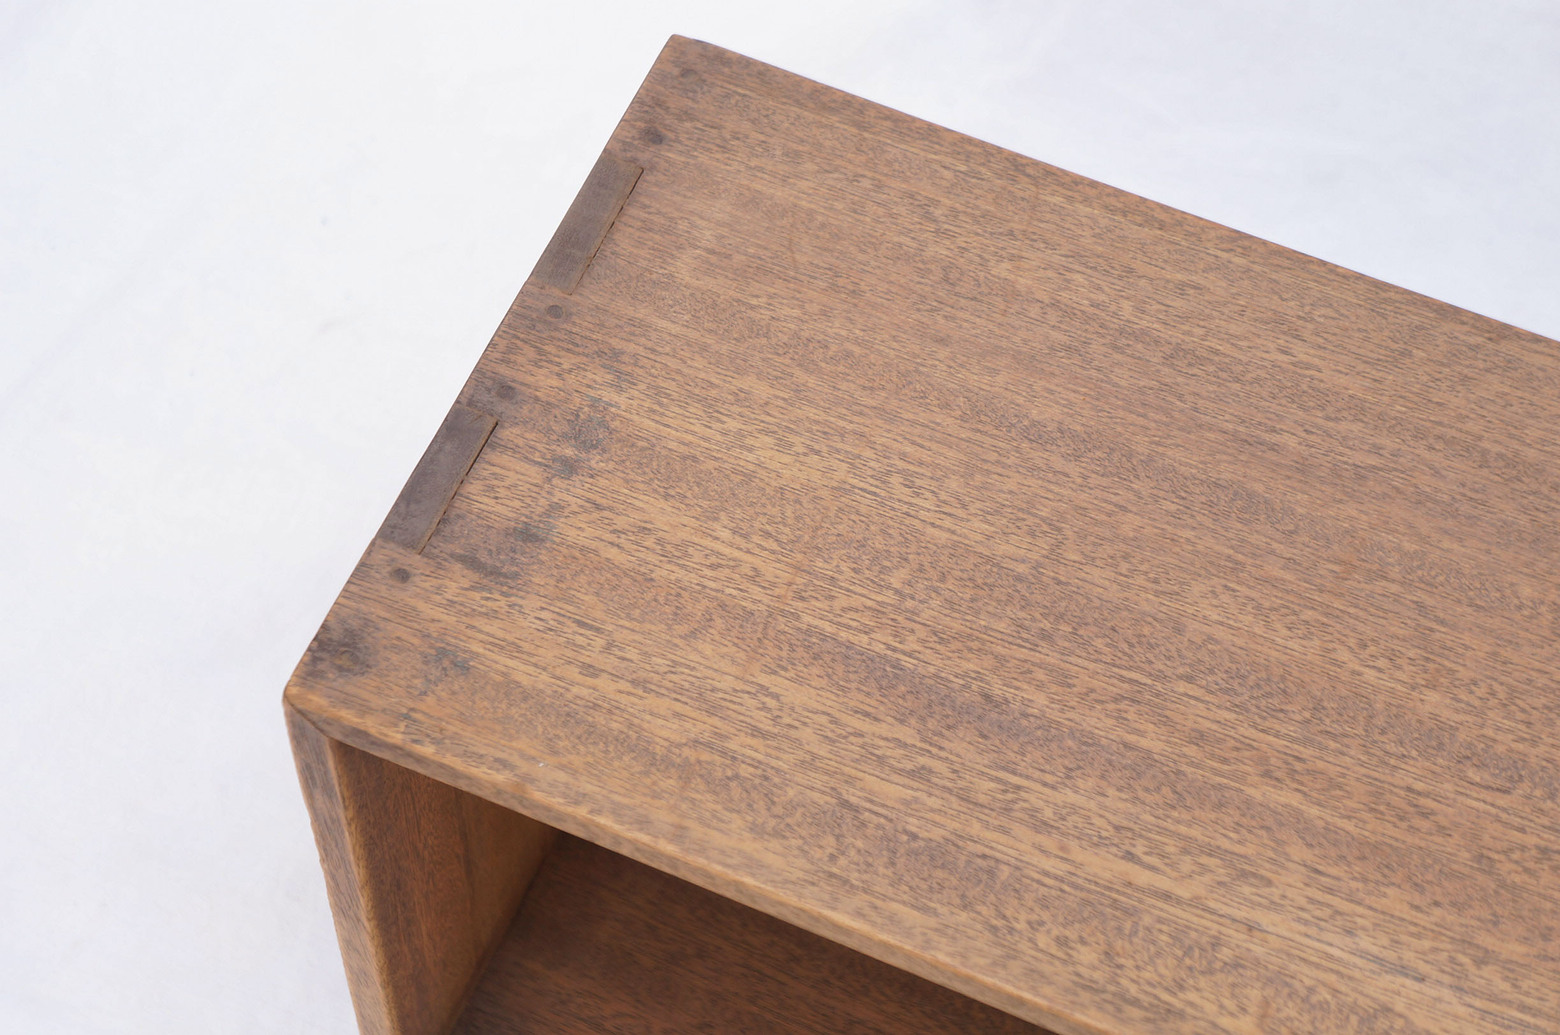 Japanese Vintage Wooden Box Shelf/ジャパンヴィンテージ ボックスシェルフ 木箱 収納ボックス レトロ シャビー 大 9